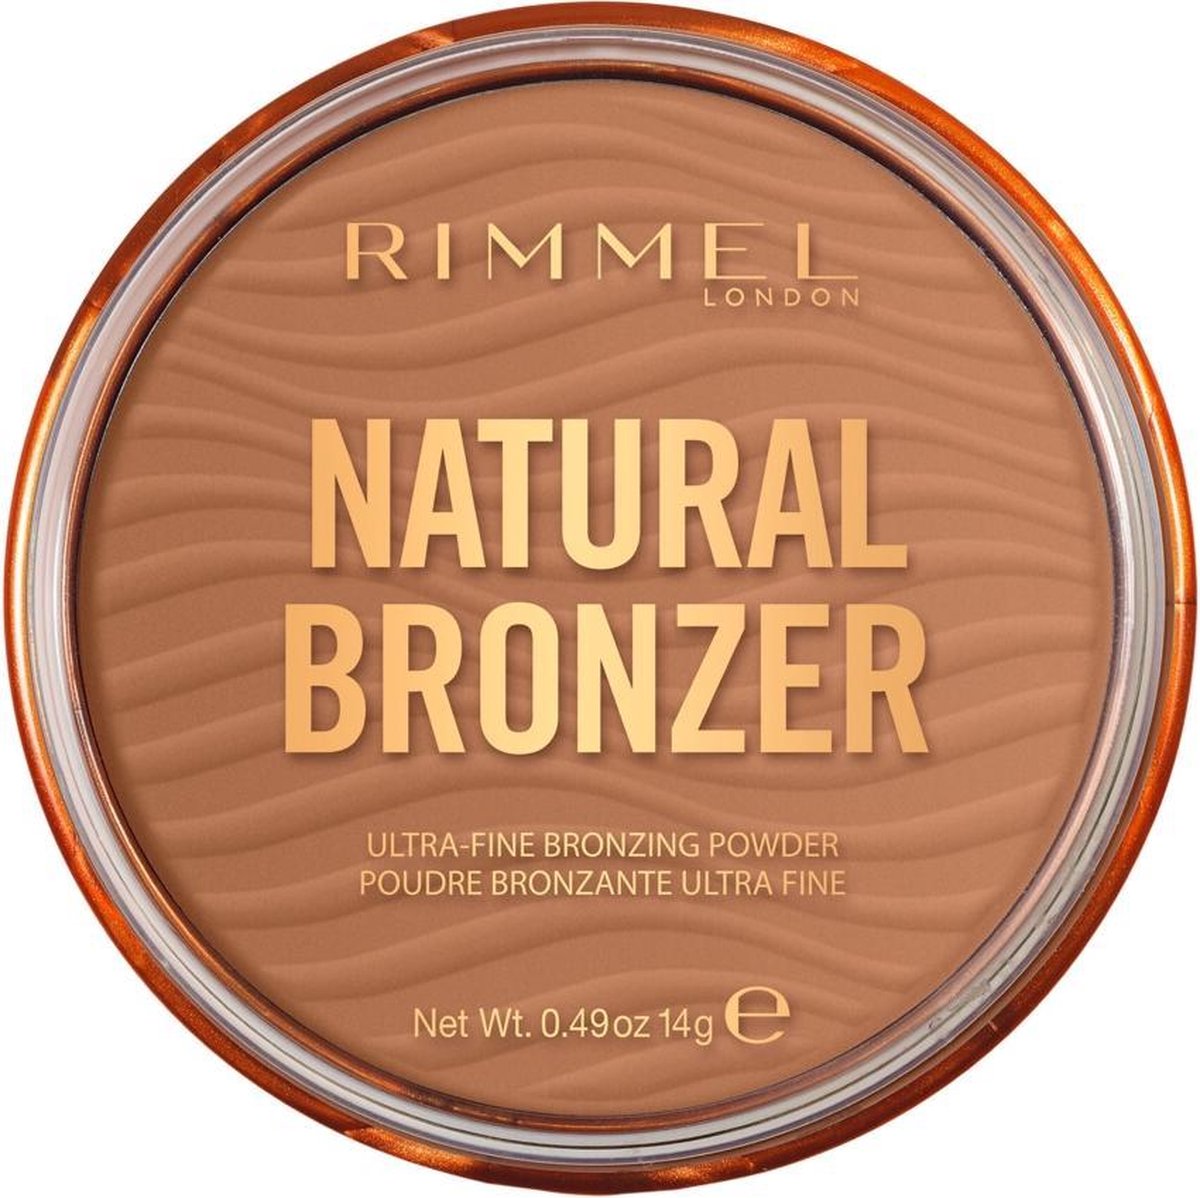 Rimmel London Natural Bronzer Ultra-Fine